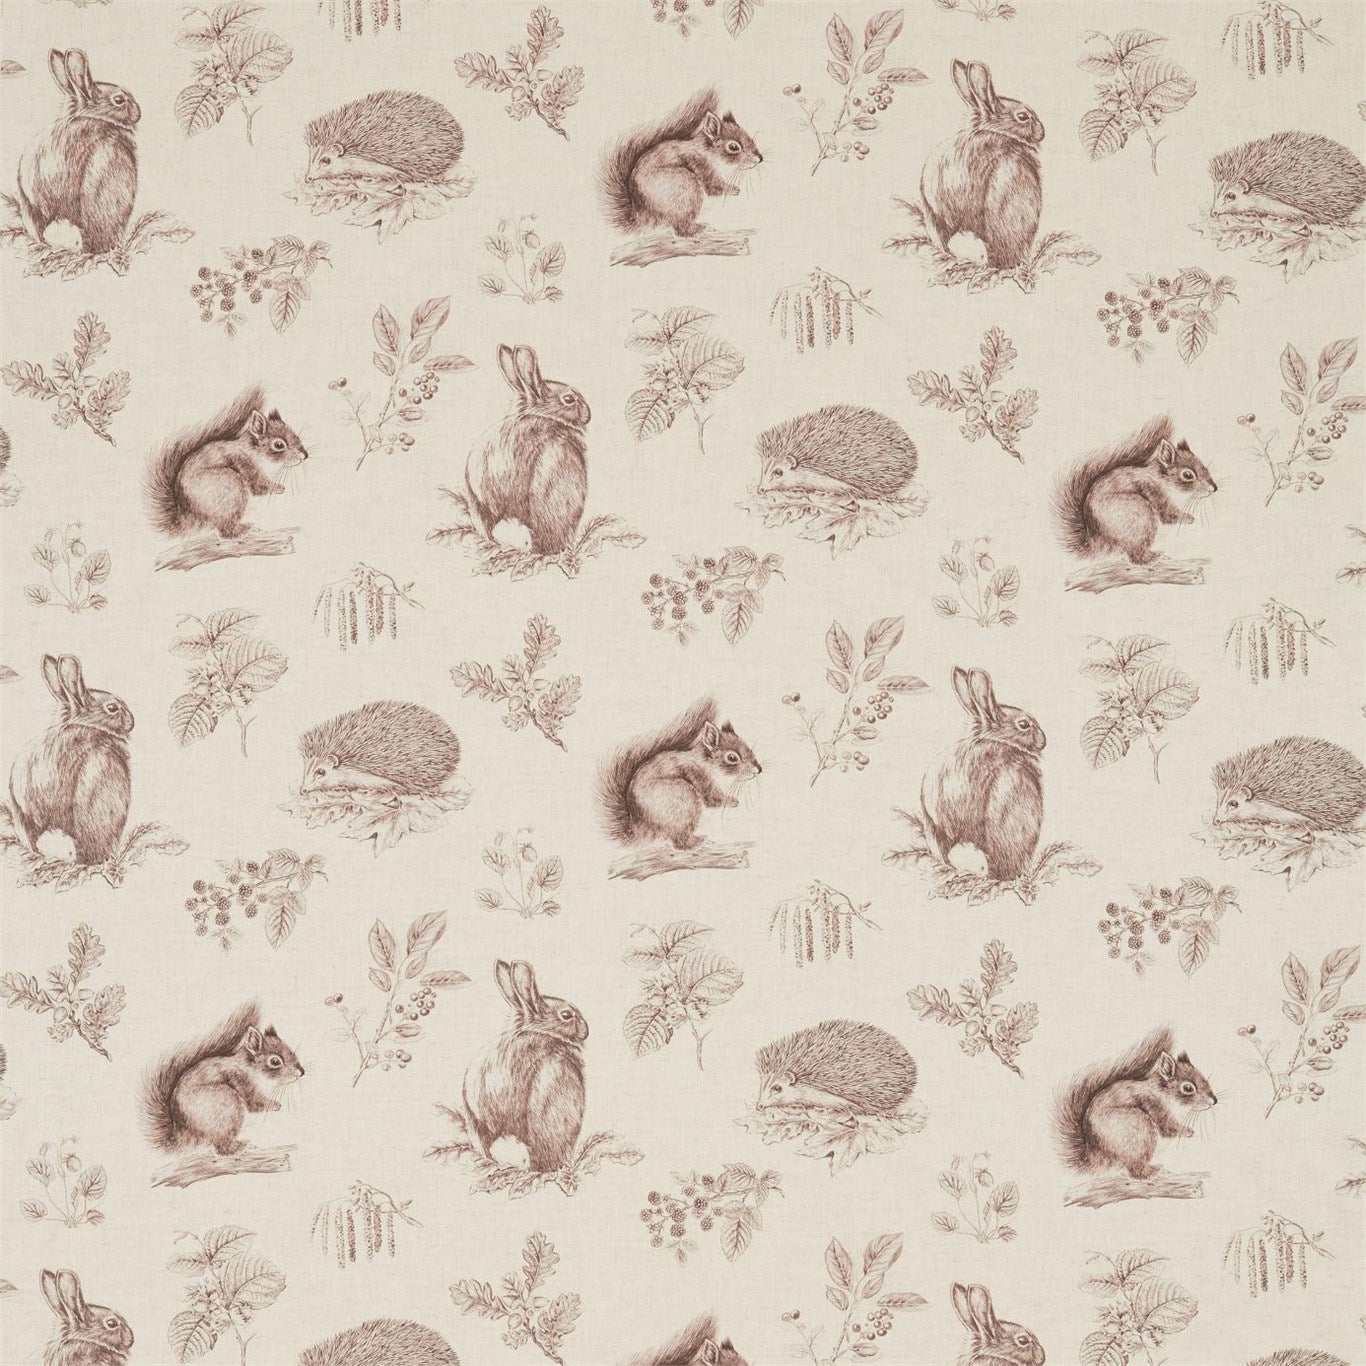 Squirrel and Hedgehog Walnut/Linen Fabric By Sanderson